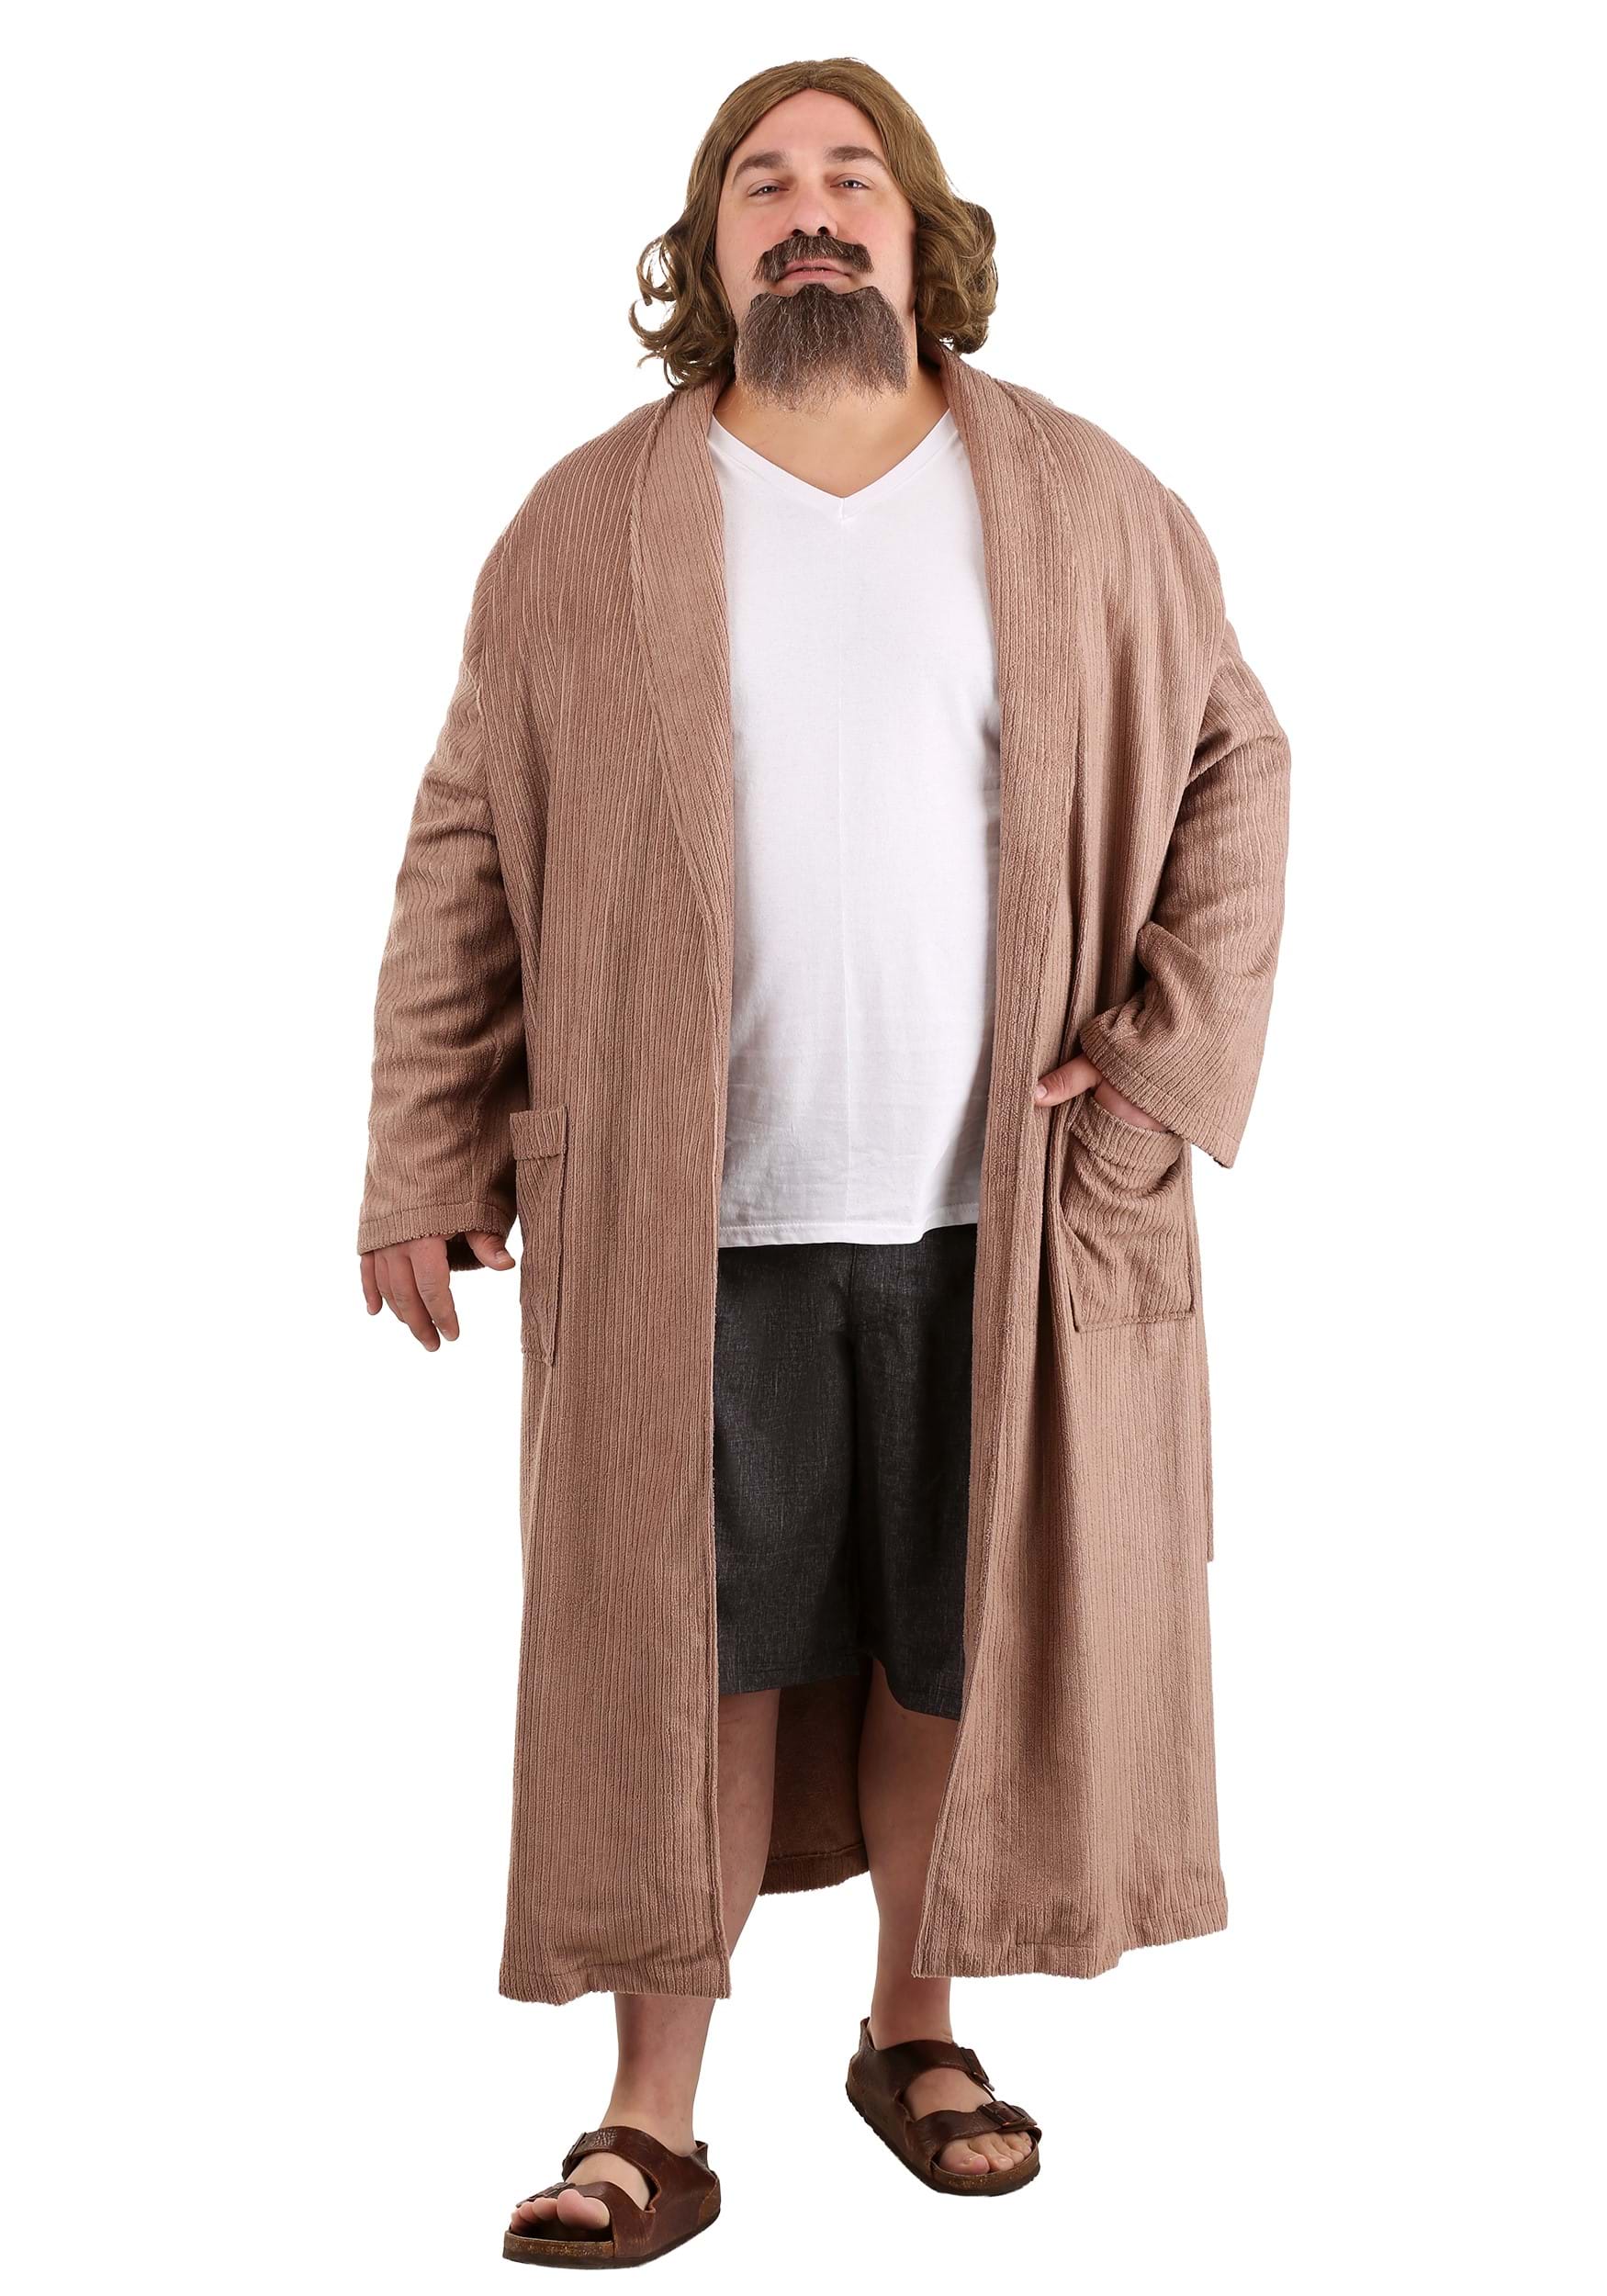 Photos - Fancy Dress BIG FUN Costumes Plus Size The  Lebowski The Dude Bathrobe Men's Costume Be 